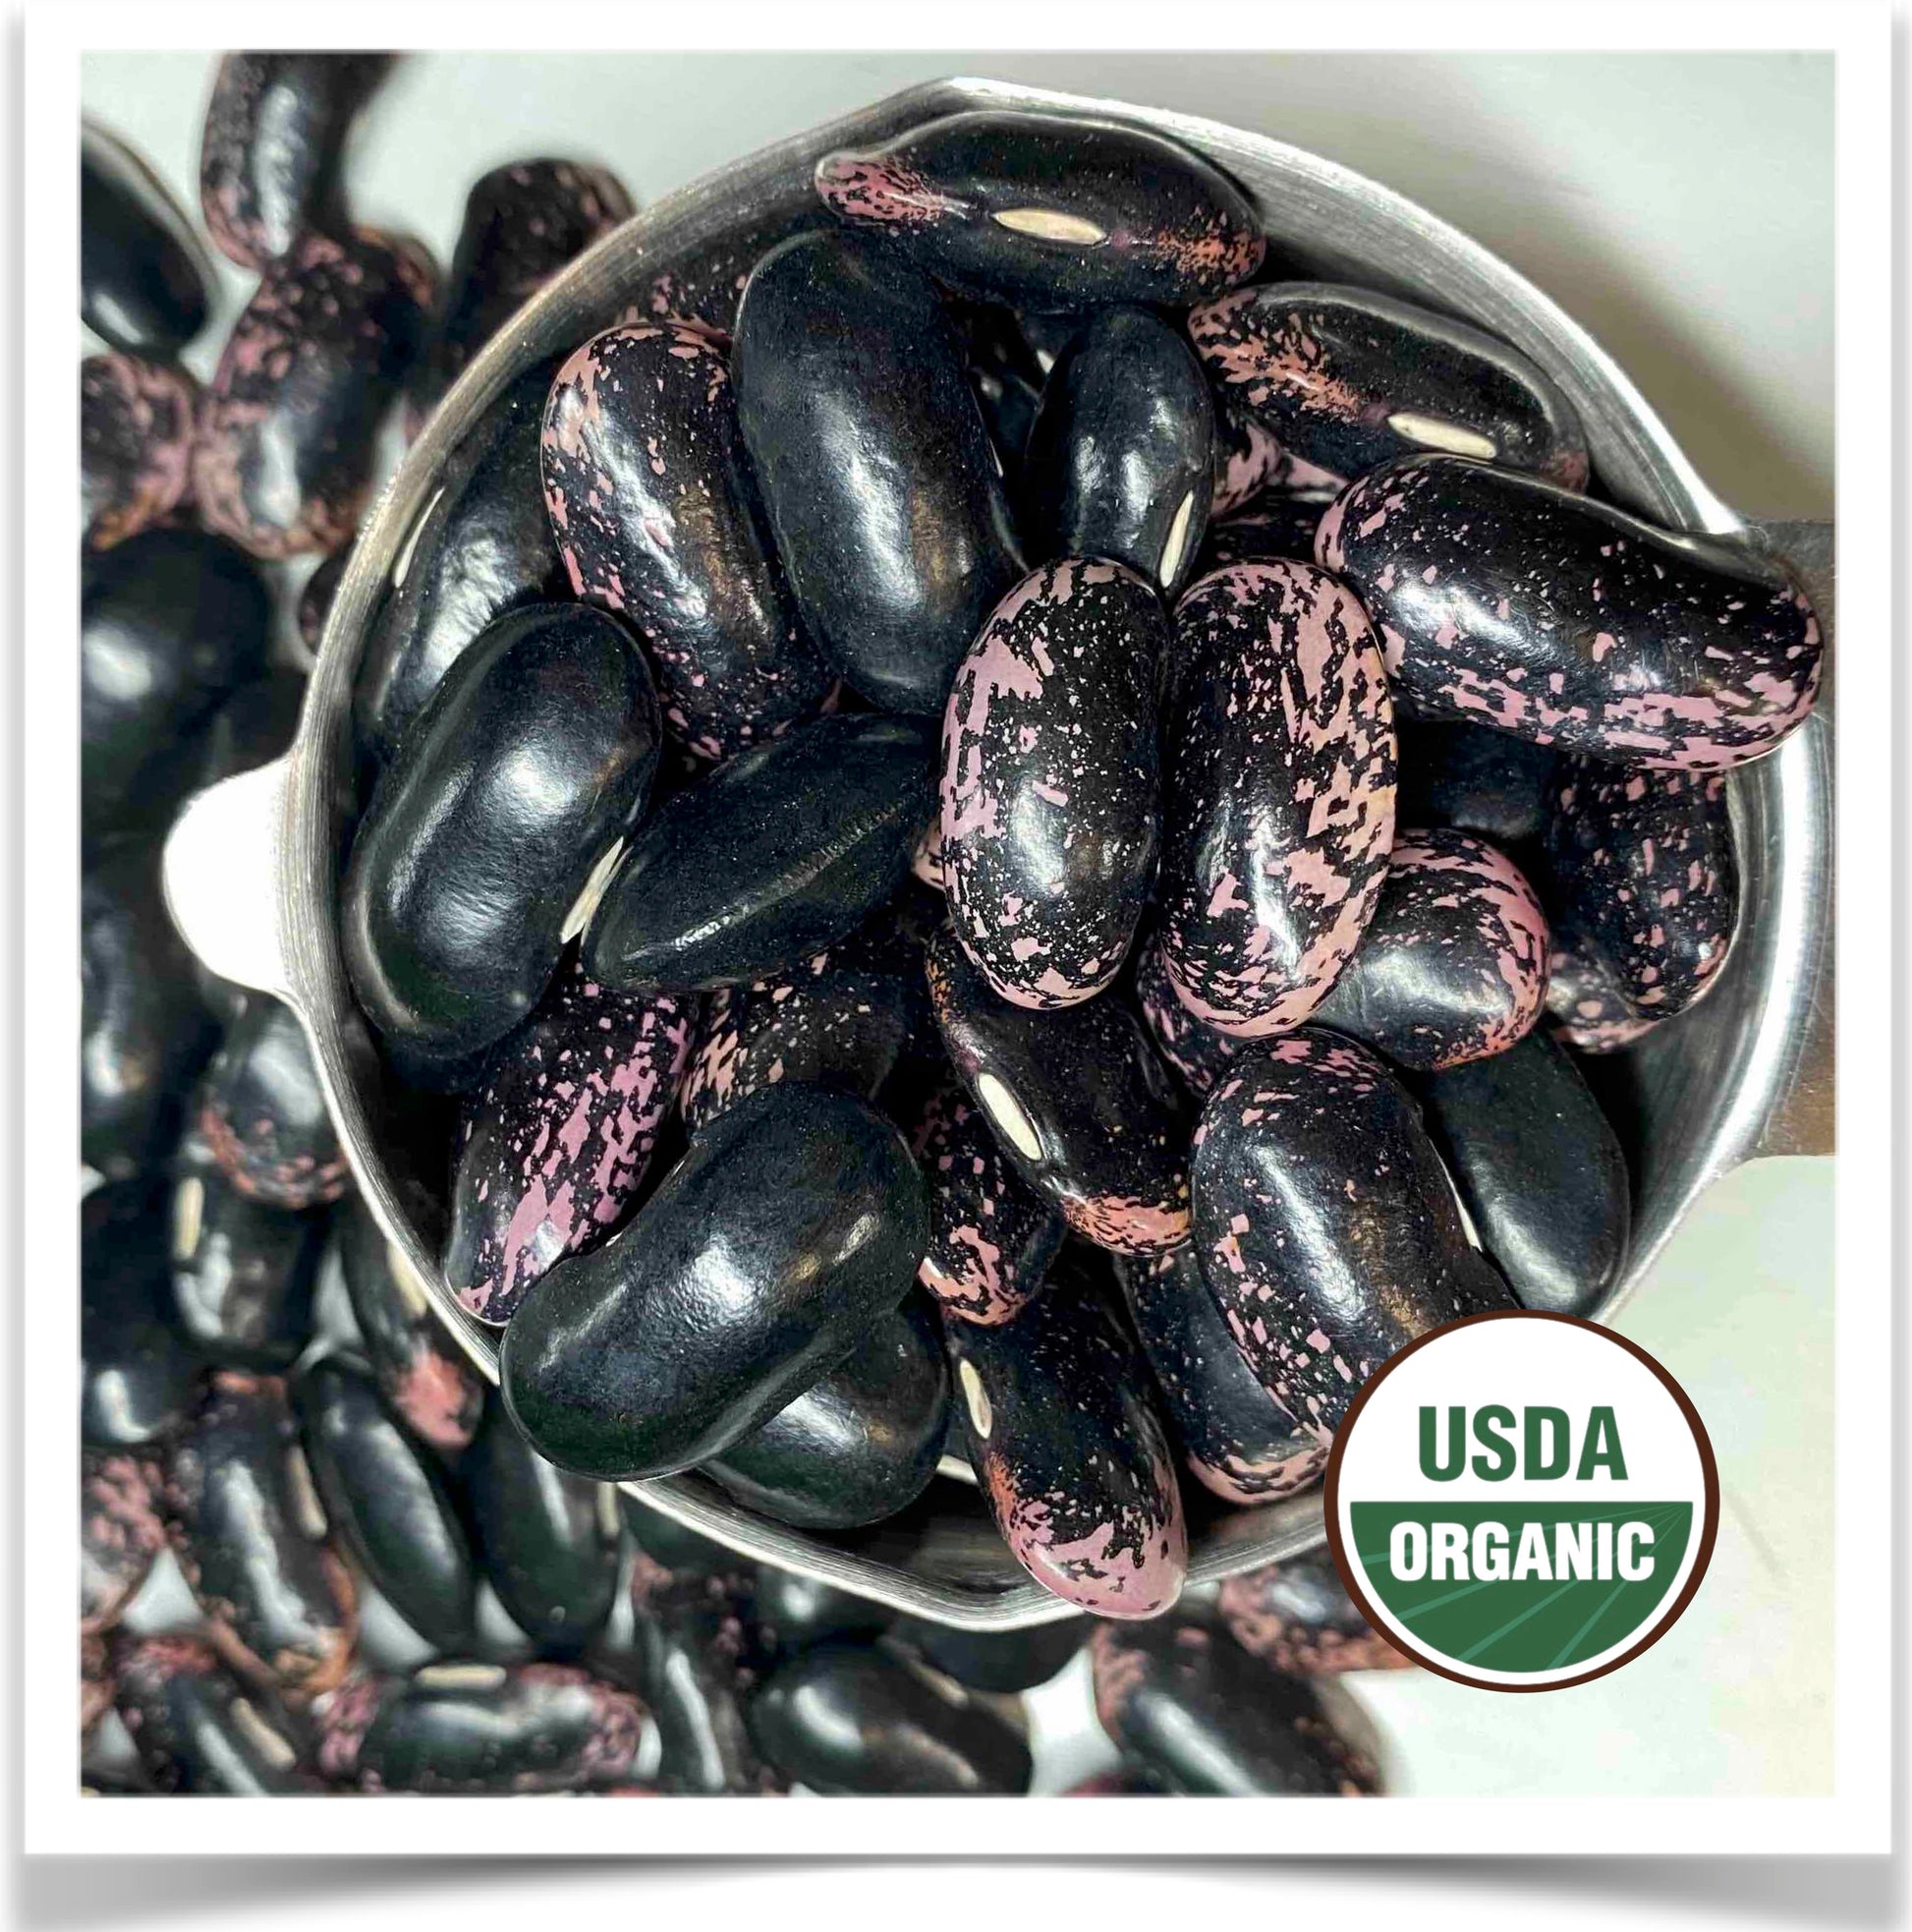 Gorgeous purple and black organic Scarlet Runner beans